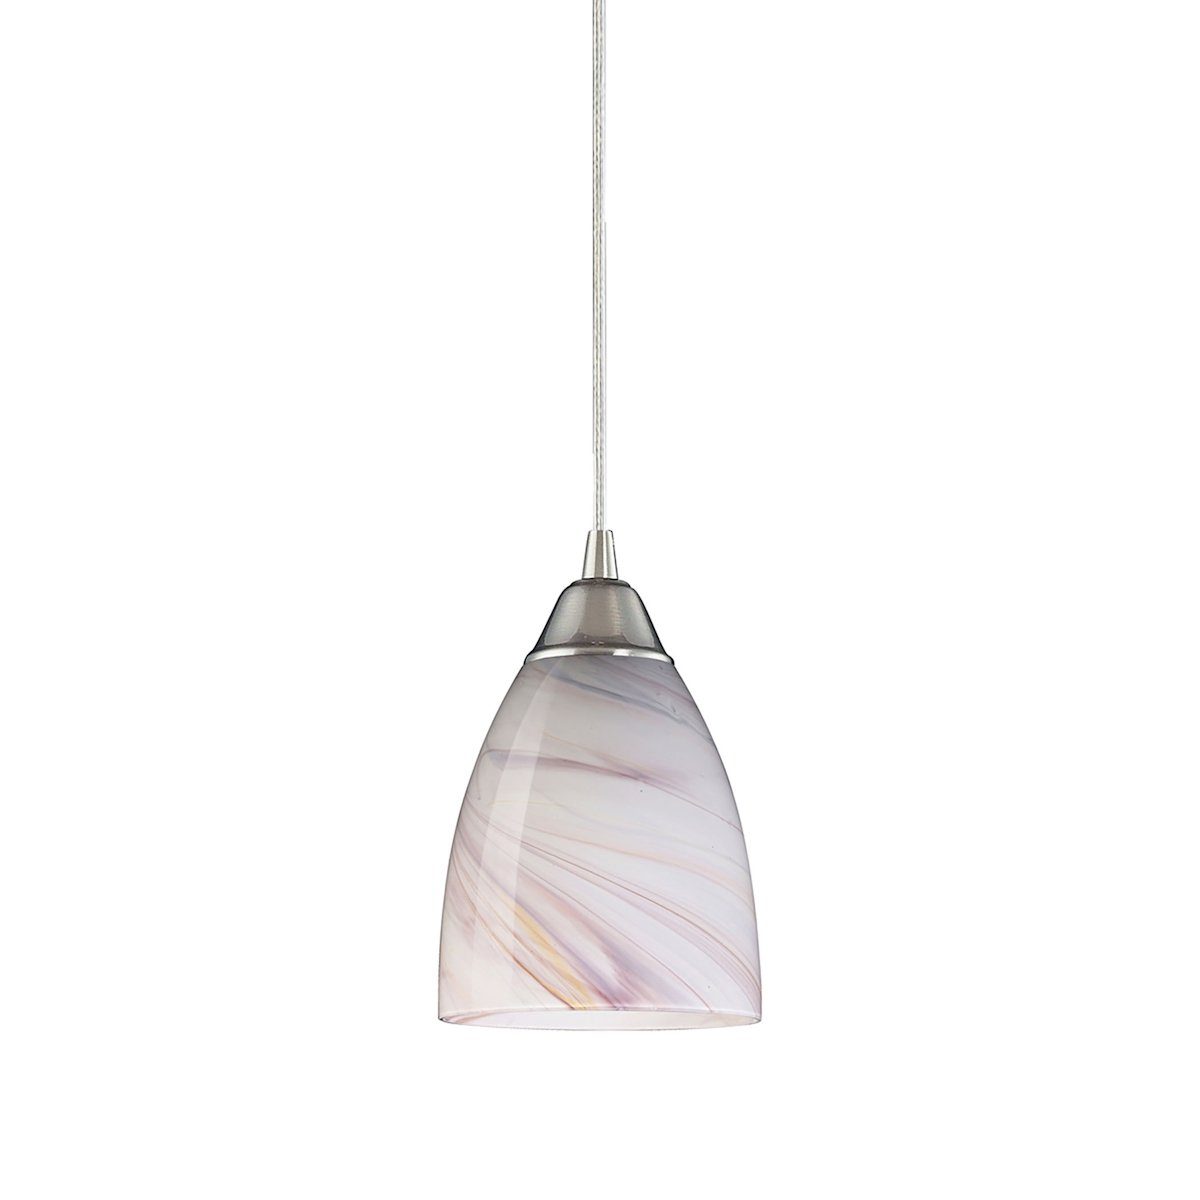 Pierra Pendant In Satin Nickel And Creme Glass Ceiling Elk Lighting 